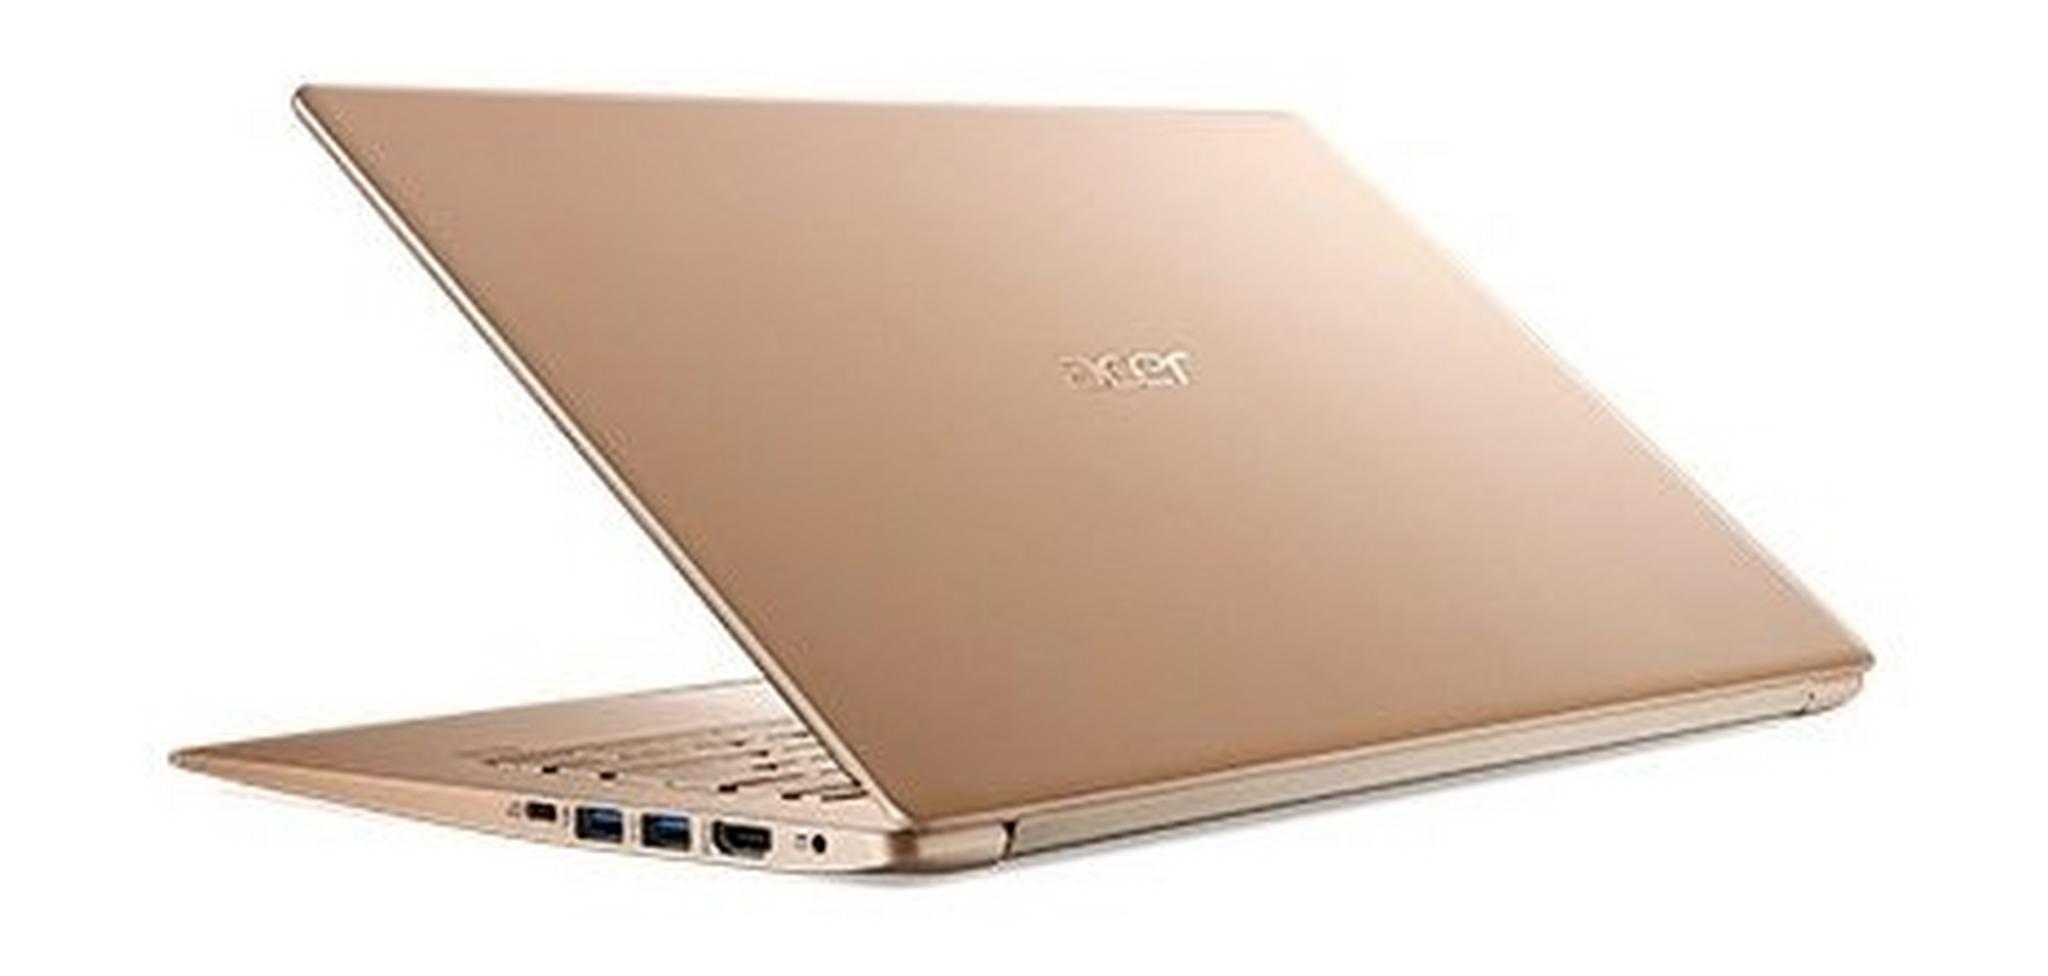 Acer Swift 5 Core i7 16GB RAM 512GB SSD 14-inch Latop - Gold